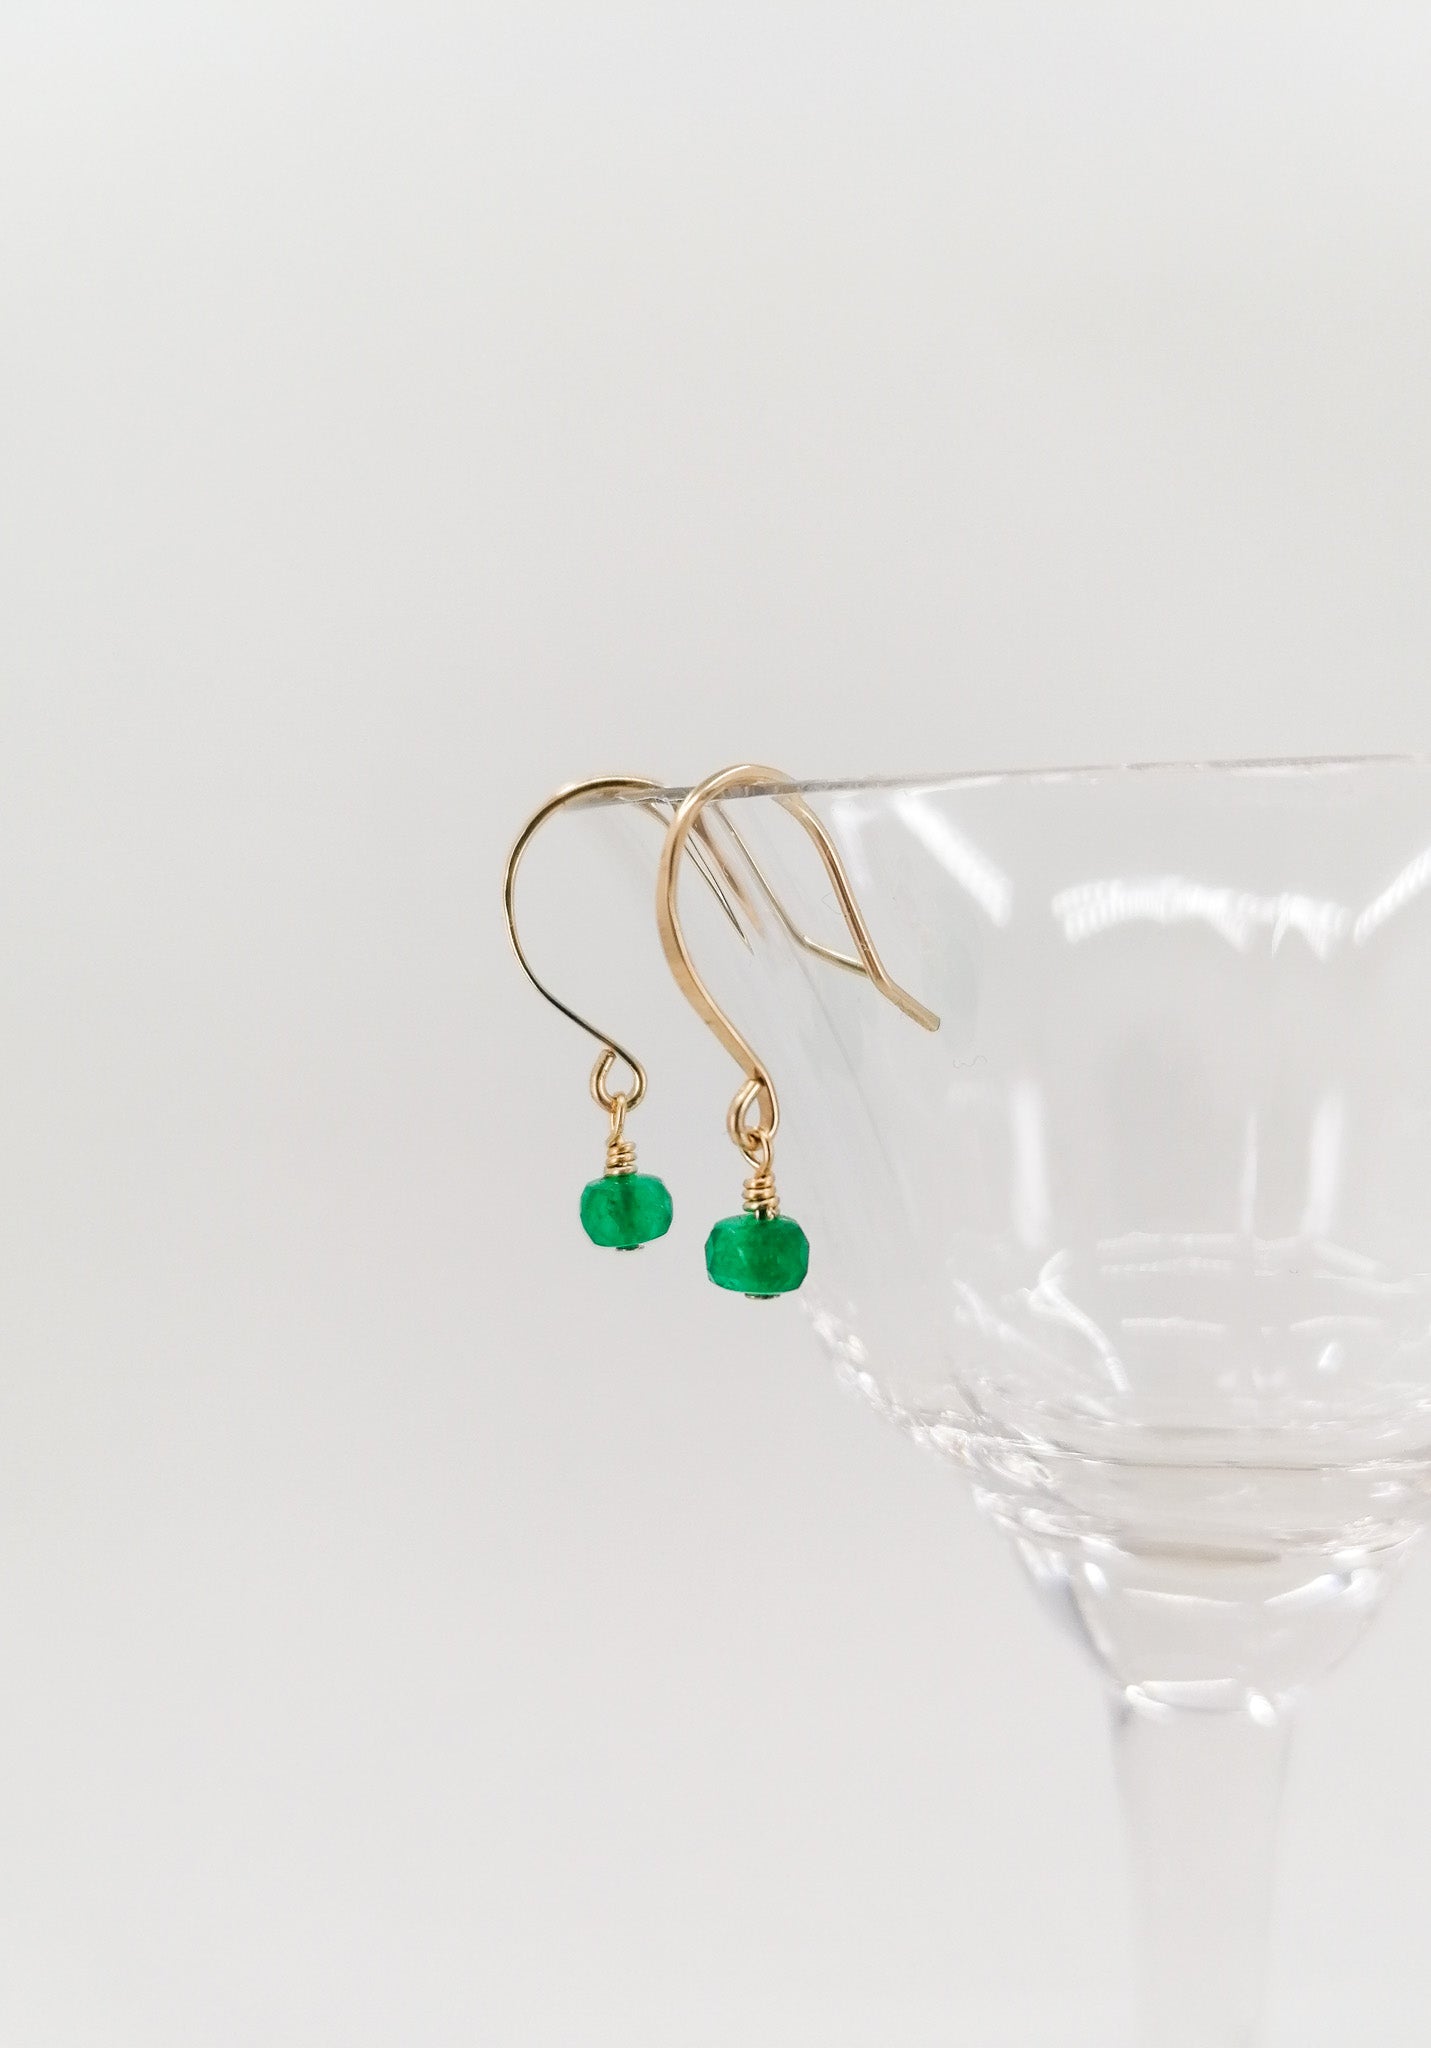 Emerald earrings - gold filled